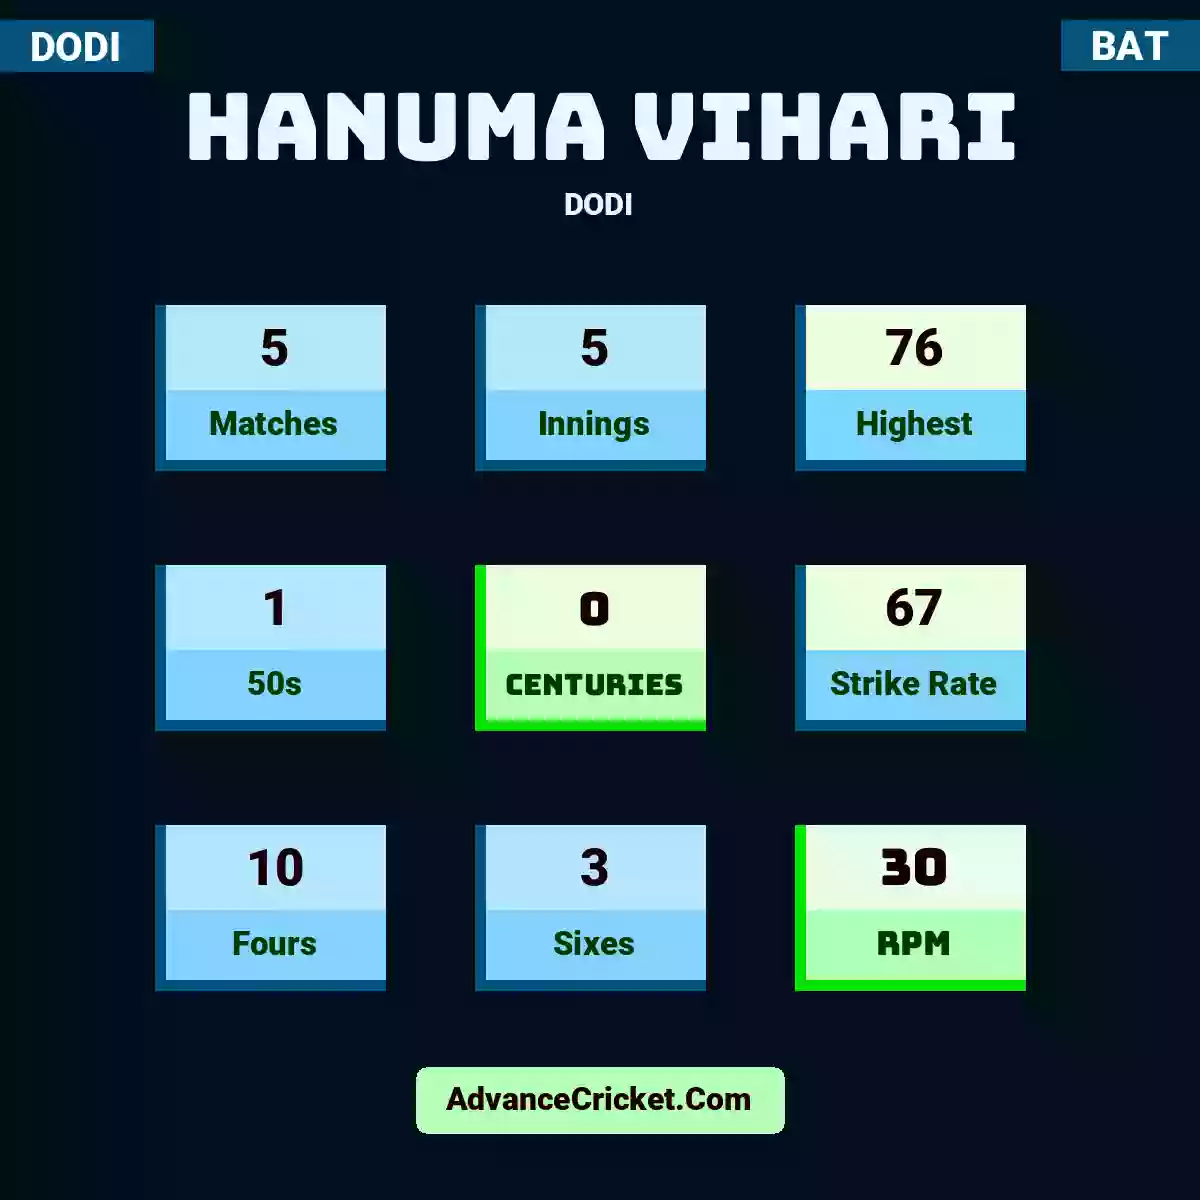 Hanuma Vihari DODI , Hanuma Vihari played 5 matches, scored 76 runs as highest, 1 half-centuries, and 0 centuries, with a strike rate of 67. H.Vihari hit 10 fours and 3 sixes, with an RPM of 30.